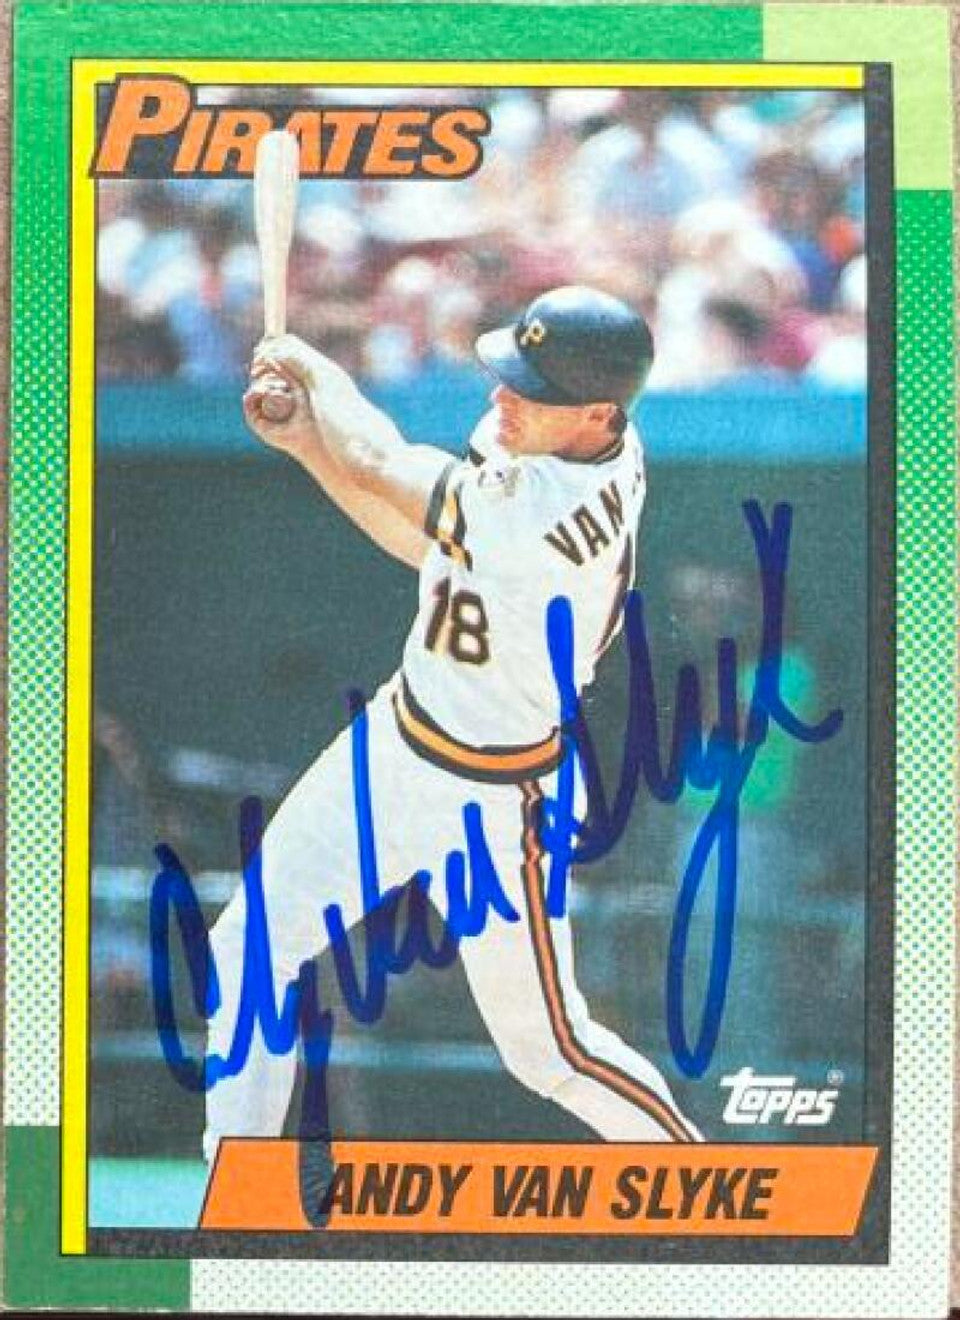 Andy Van Slyke Signed 1990 Topps Baseball Card - Pittsburgh Pirates